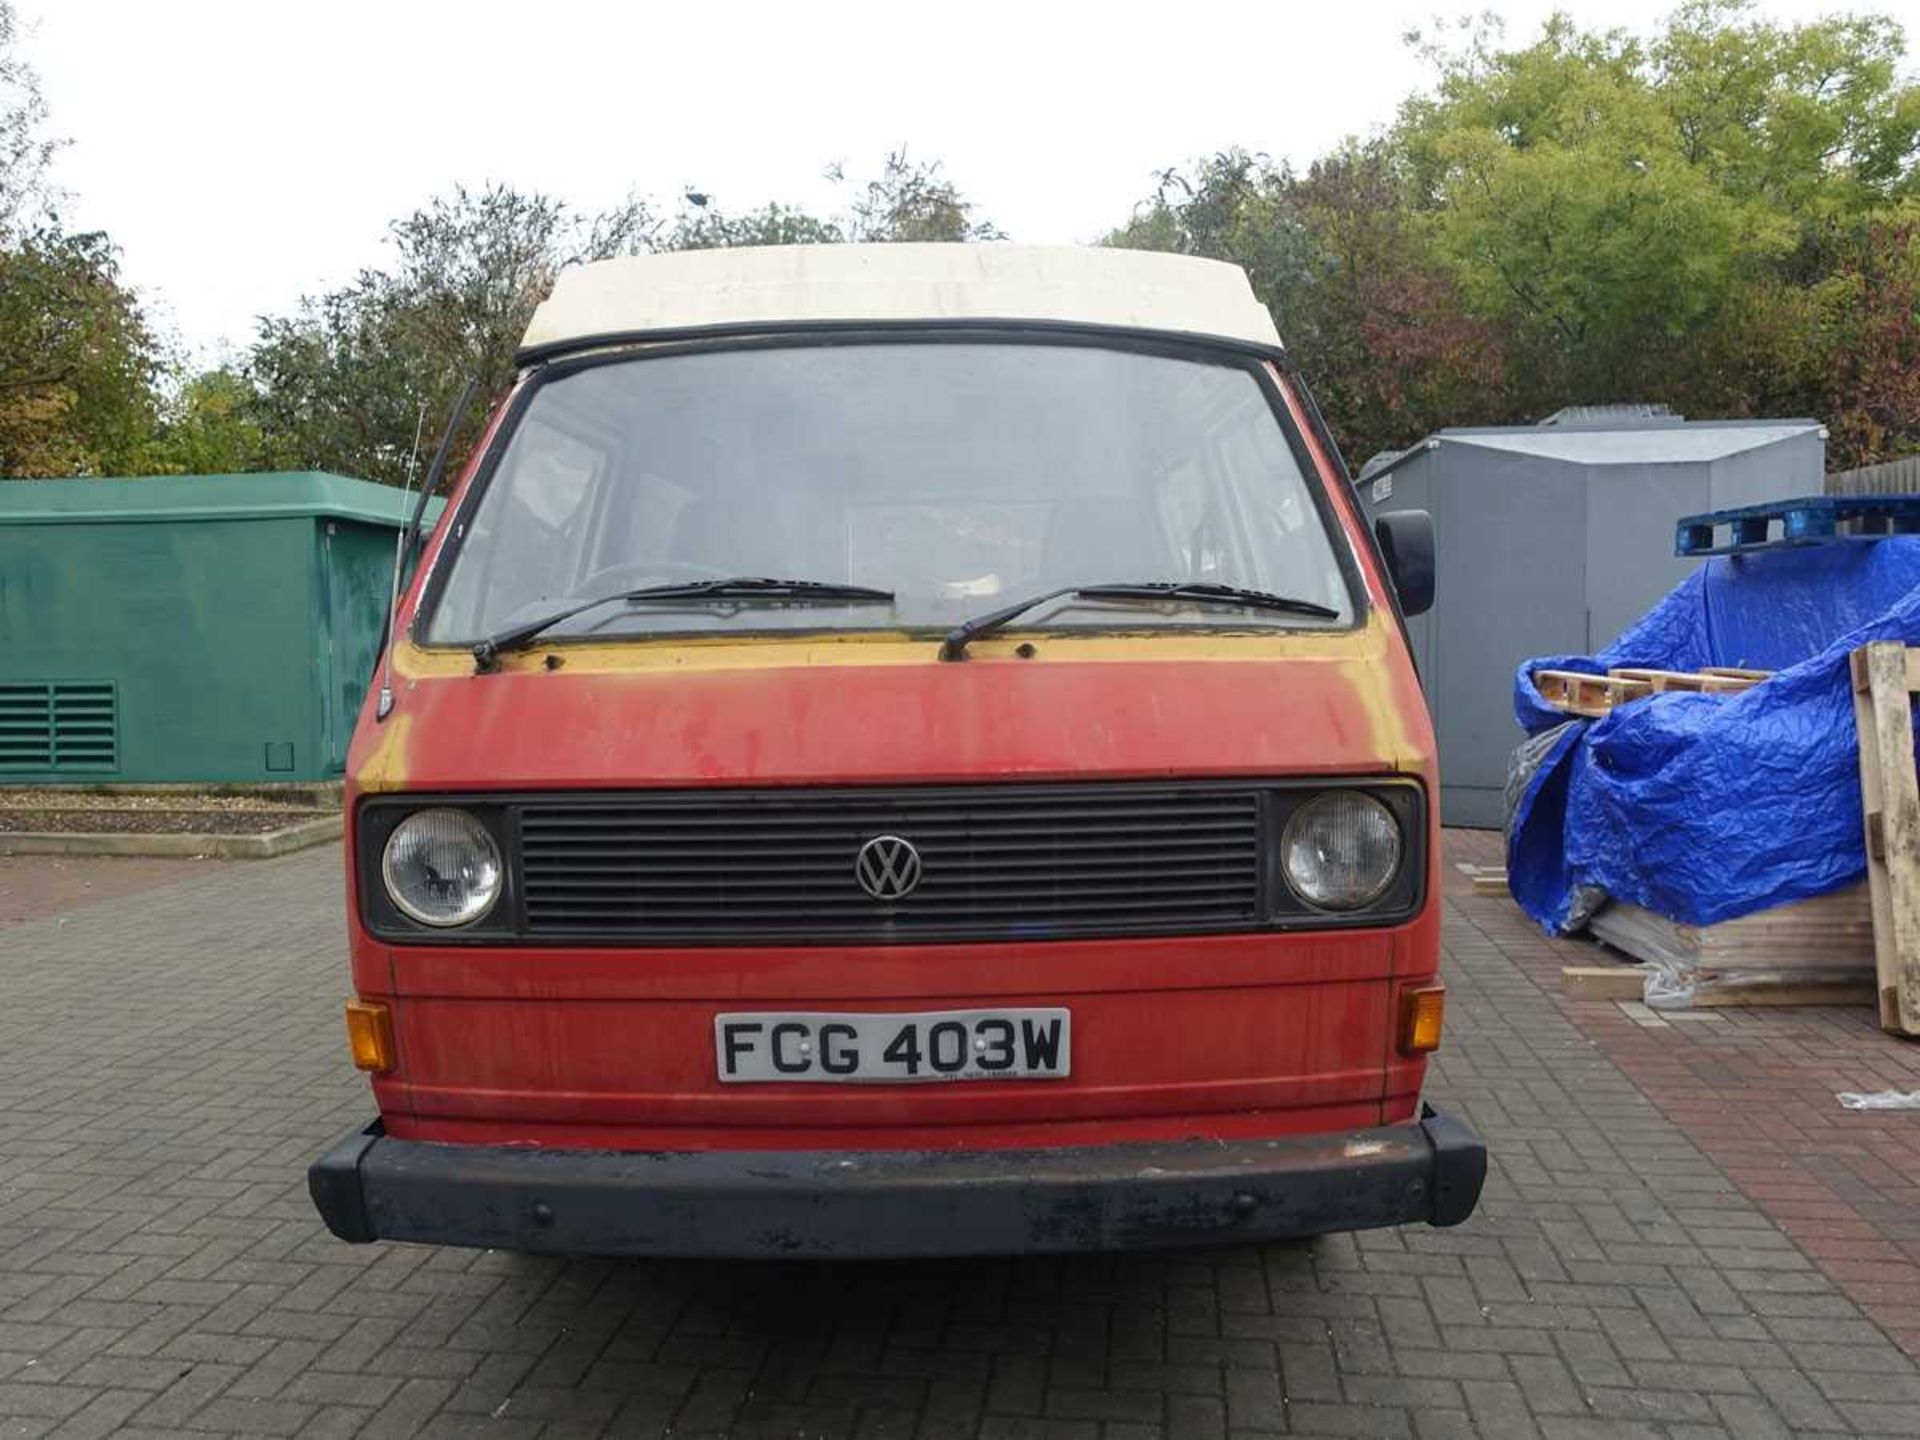 (FCG 403W) Volkswagen T25 Camper Van, Devon Moonraker in red and cream, with original gas fridge